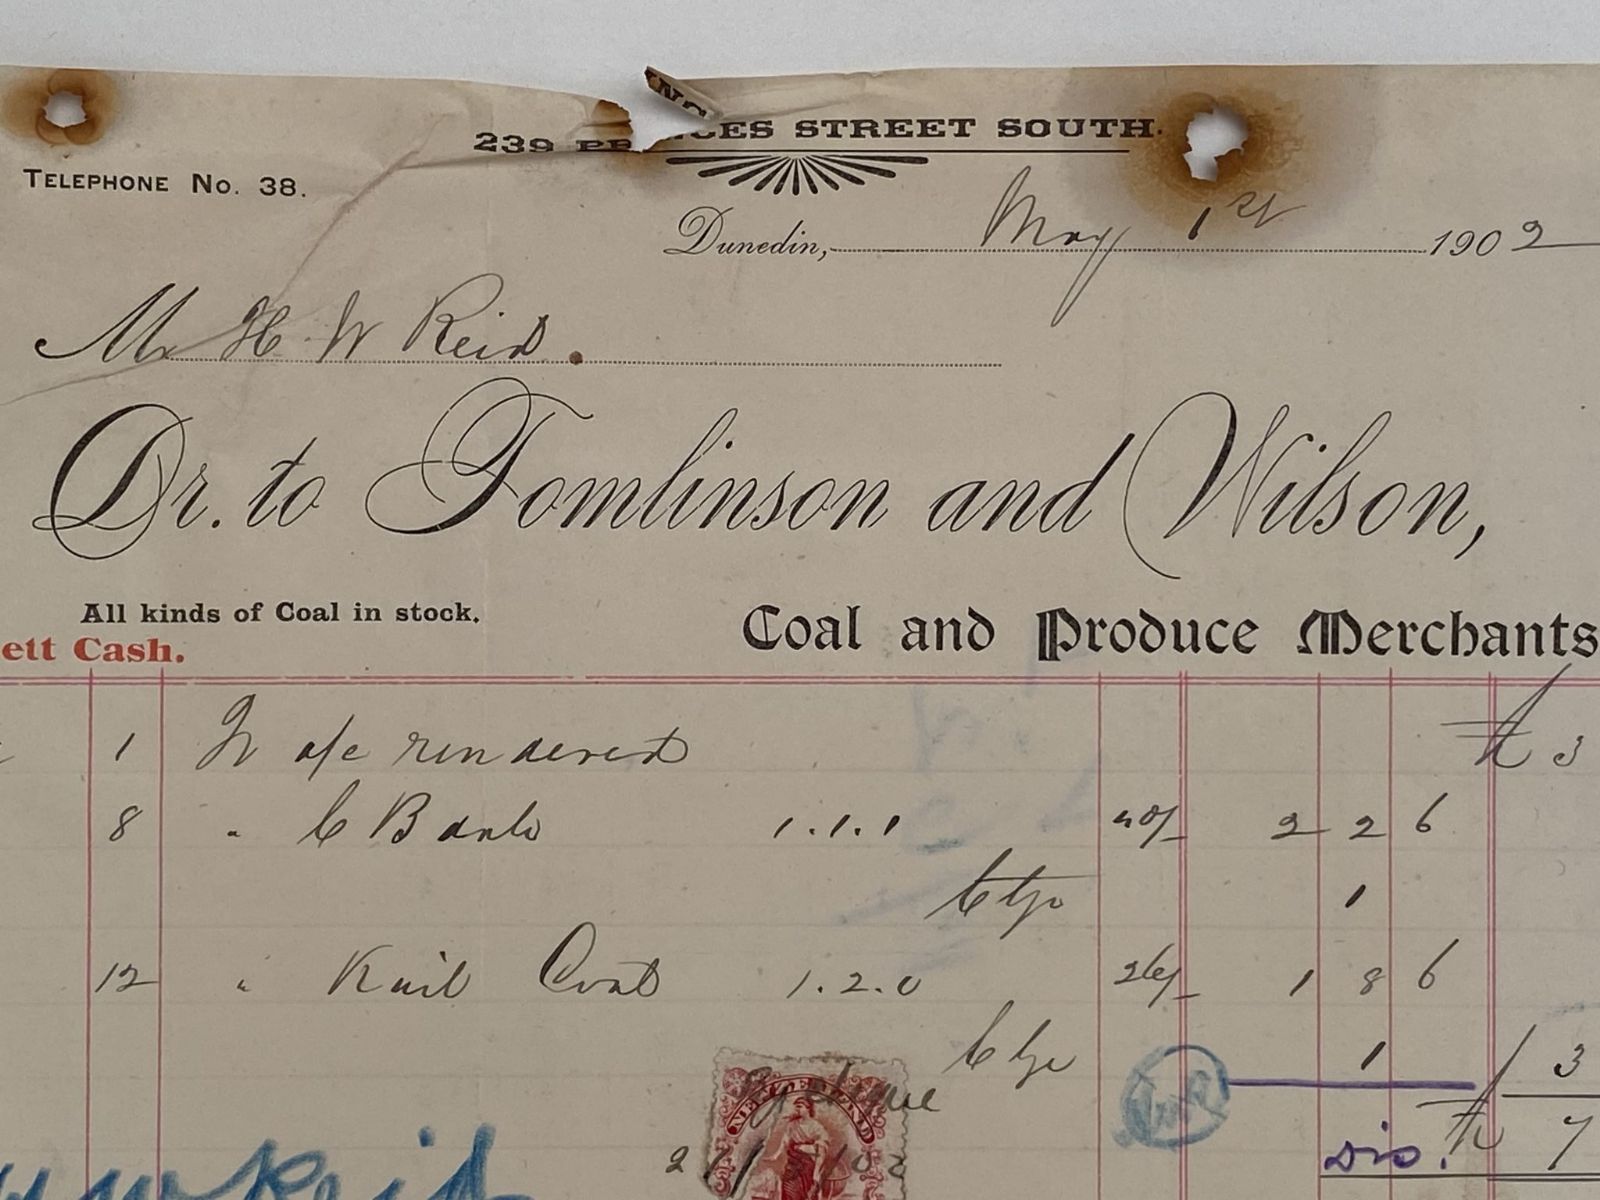 ANTIQUE INVOICE / RECEIPT: Tomlinson and Wilson - Coal Merchants 1902